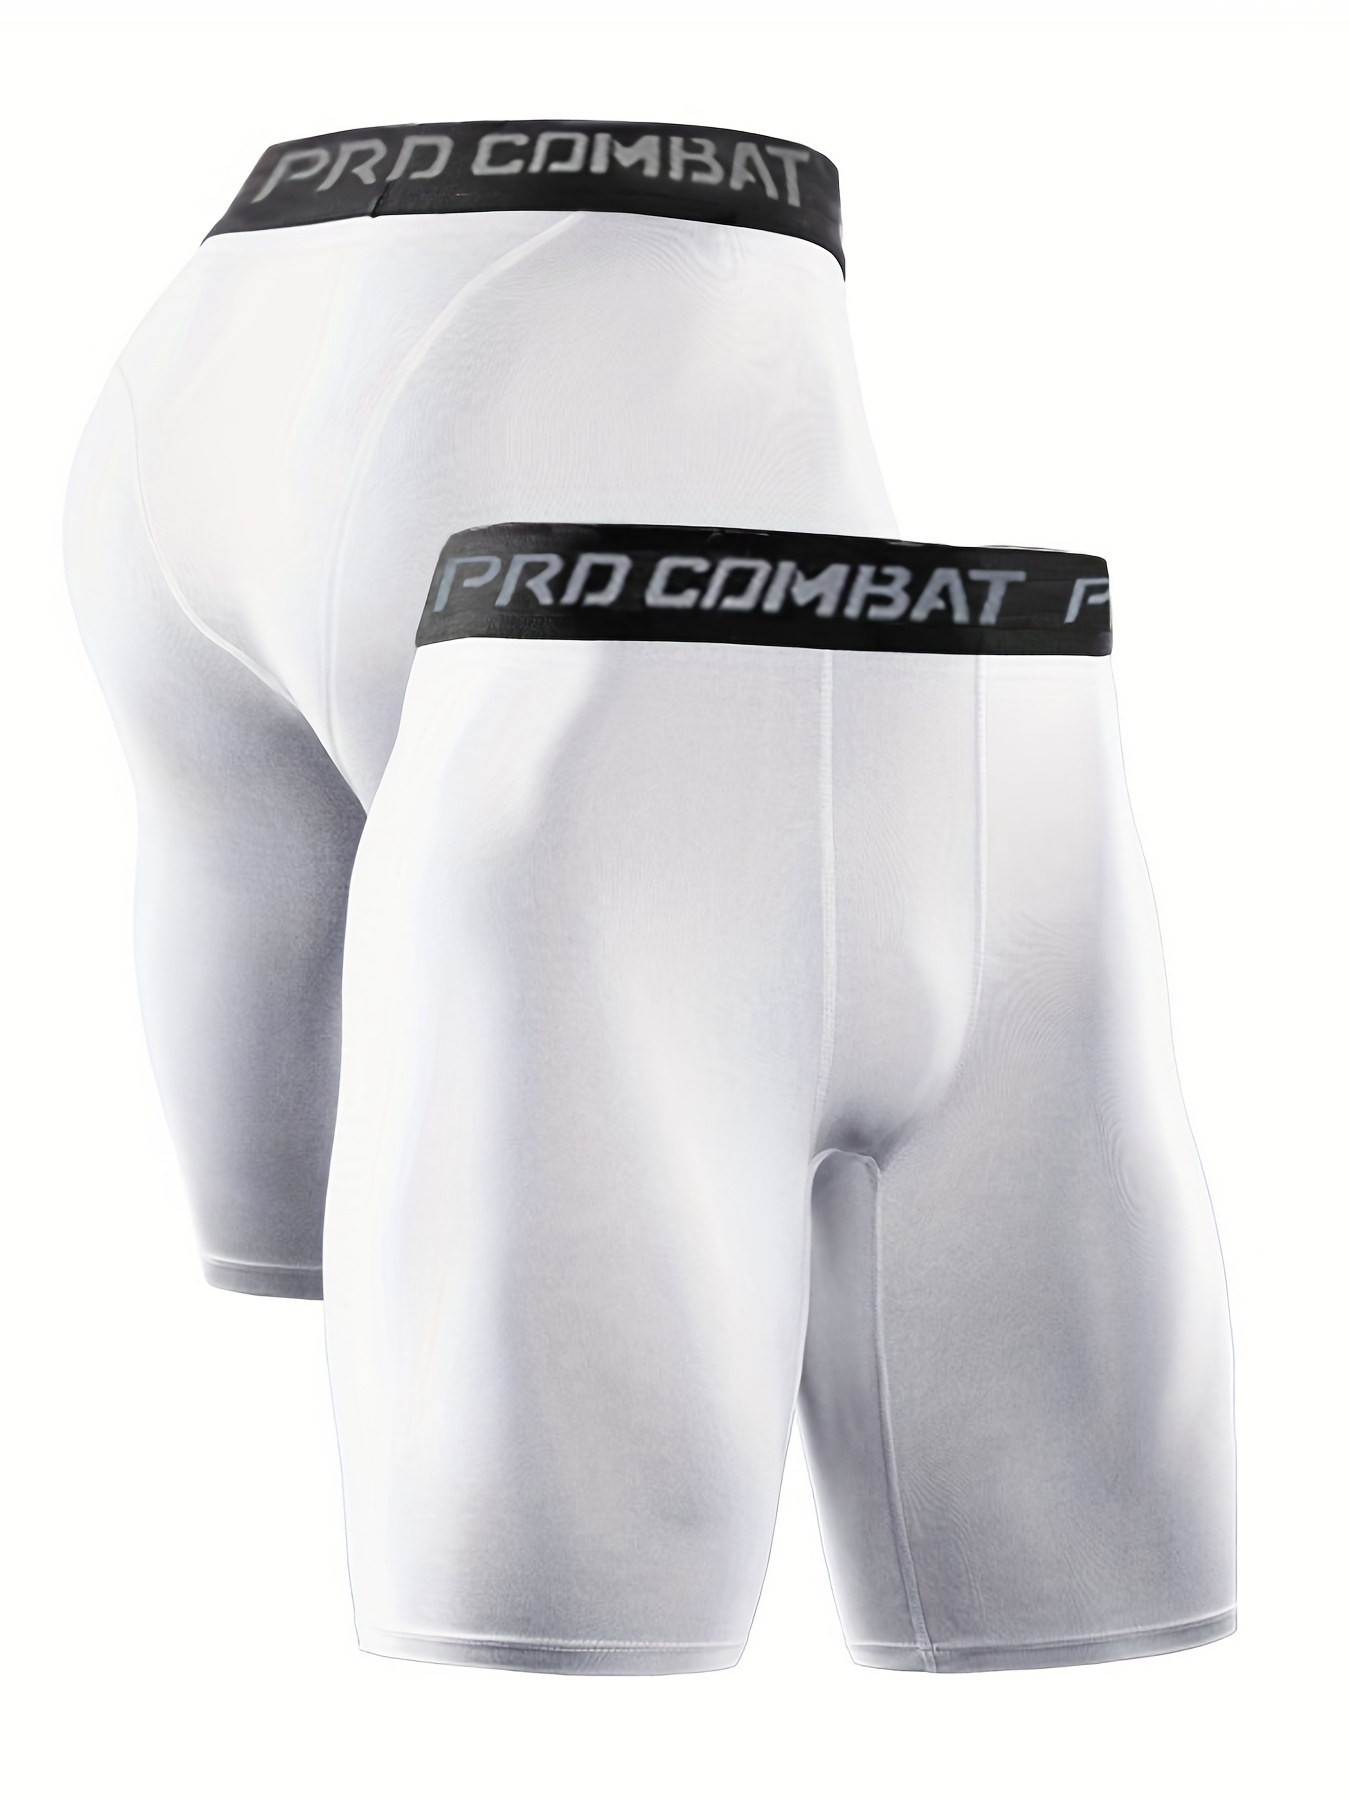 Mens Nike Pro NBA Compression Shorts Underwear White/Gray, Black